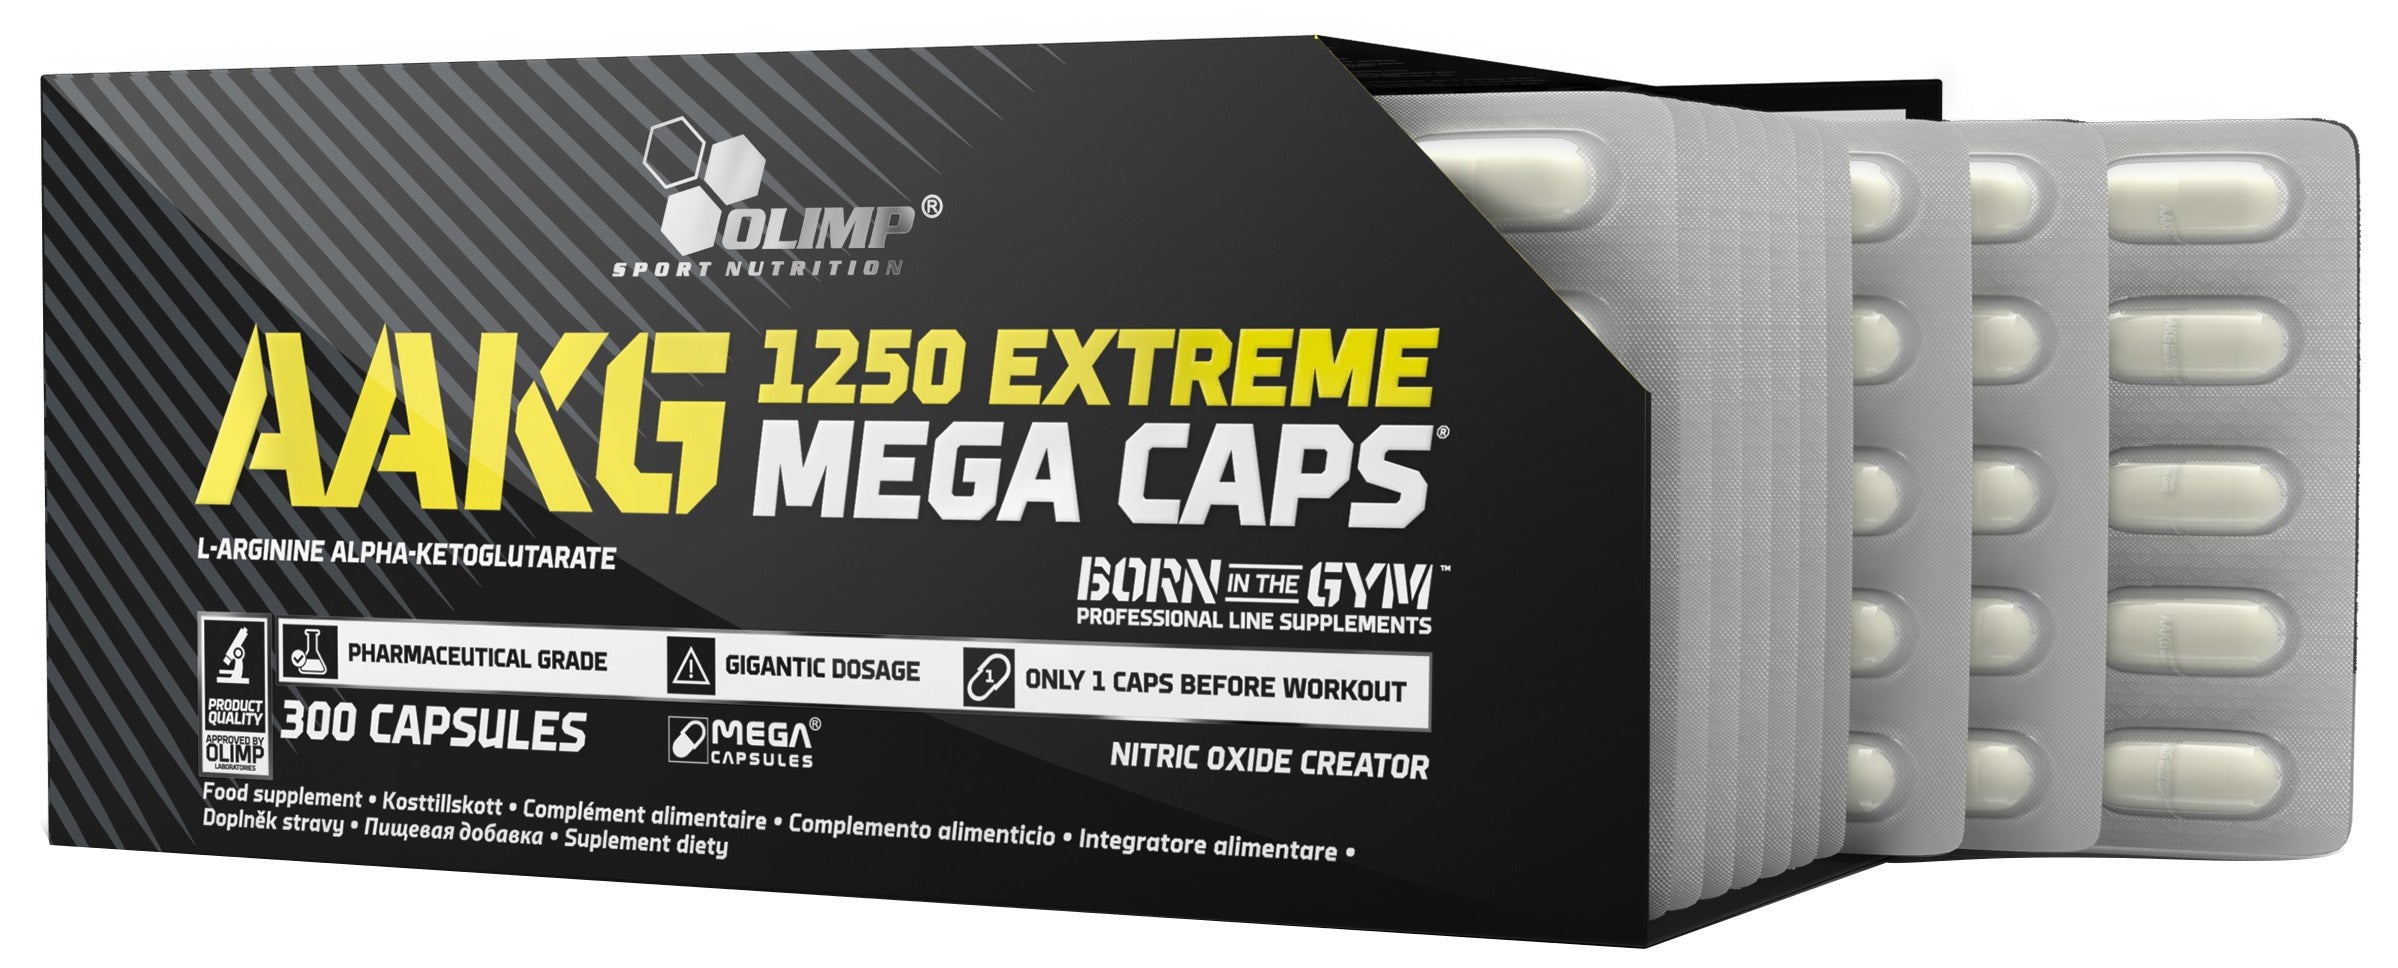 Olimp Nutrition AAKG Extreme Mega Caps  300 caps - gymstop